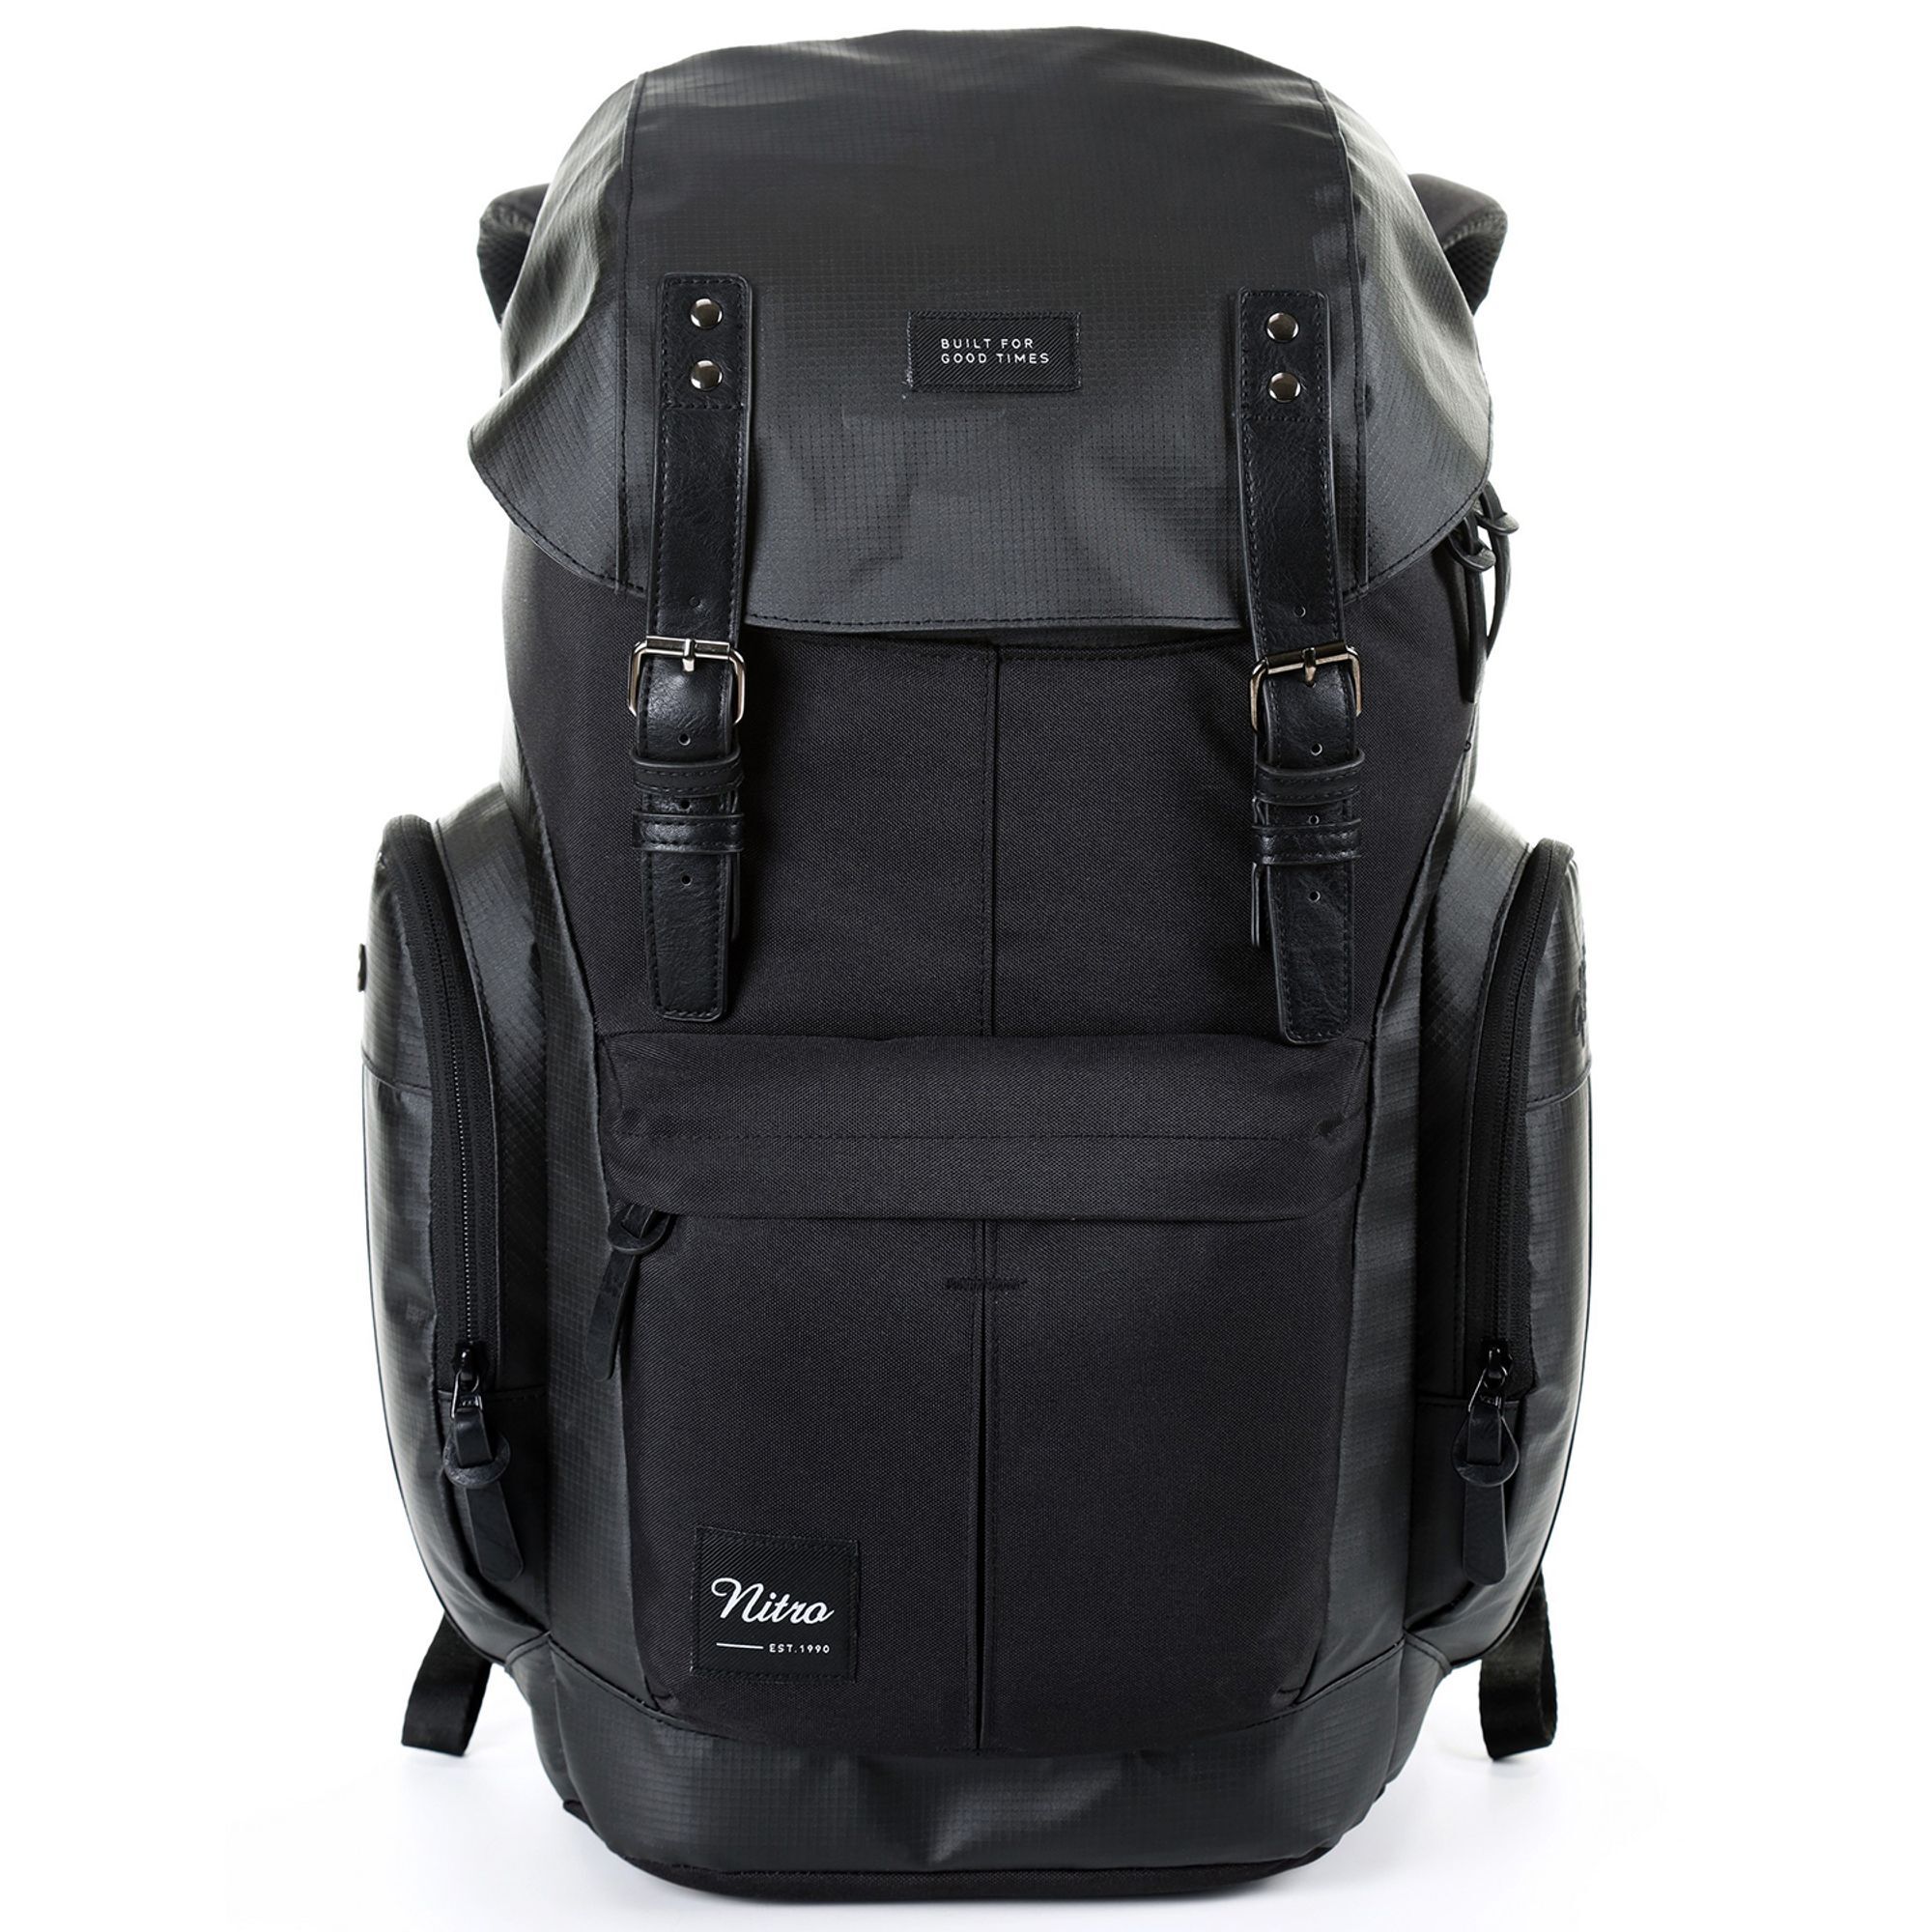 Рюкзак Nitro Urban Daypacker 46 cm Laptopfach, цвет tough black